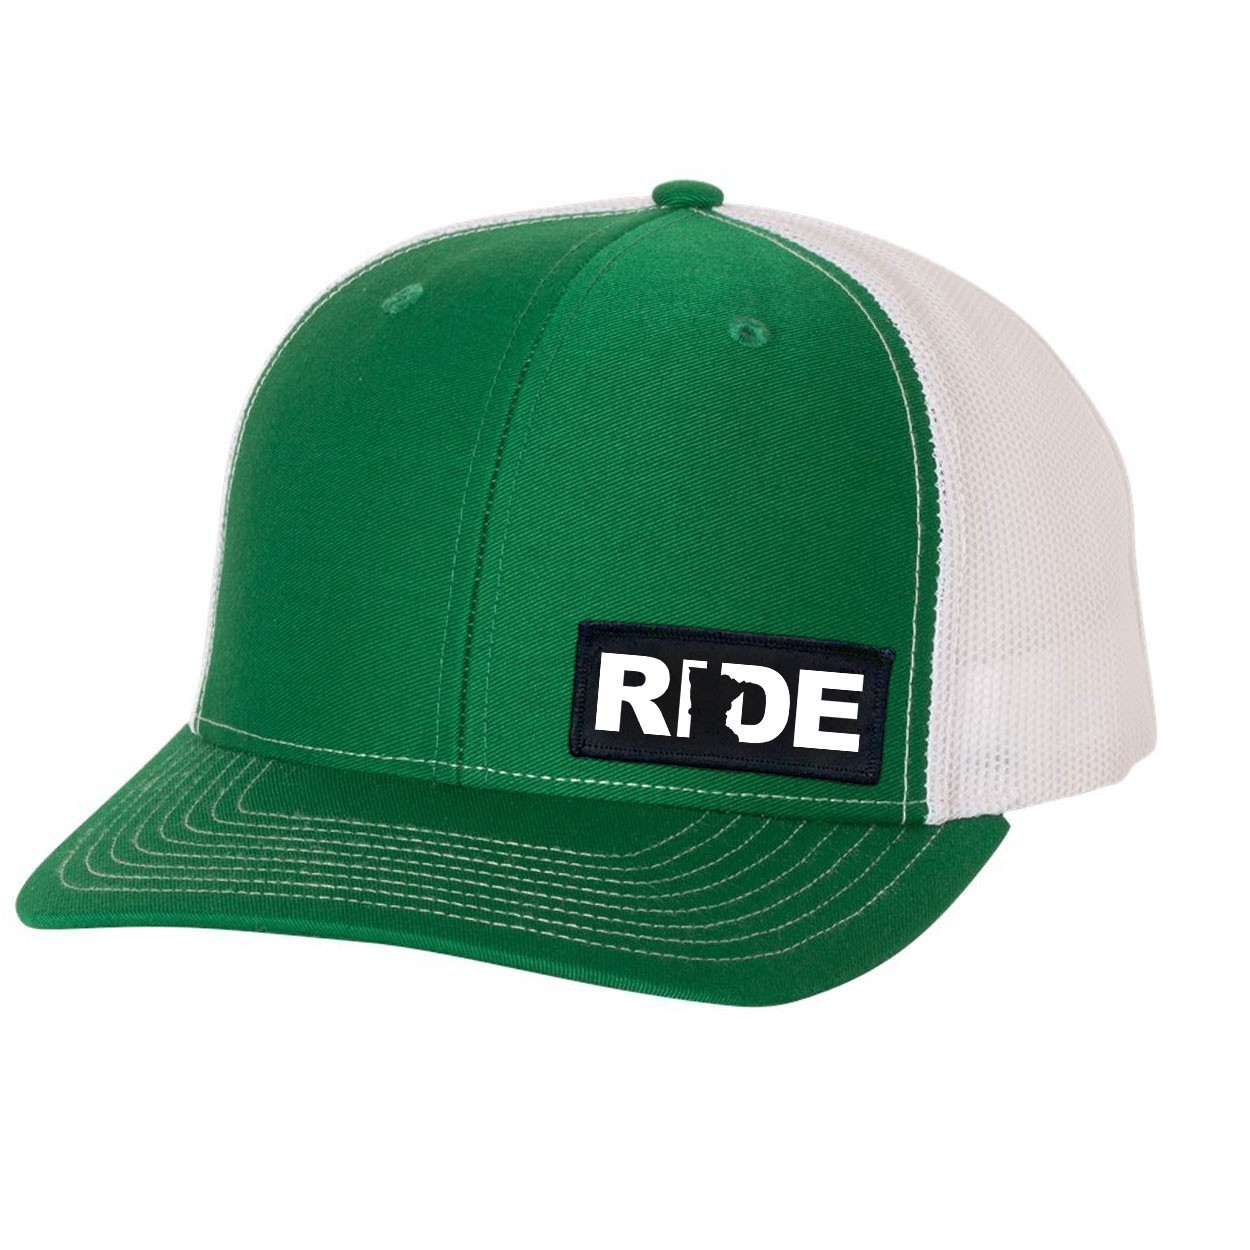 Ride Minnesota Night Out Woven Patch Snapback Trucker Hat Green/White (White Logo)